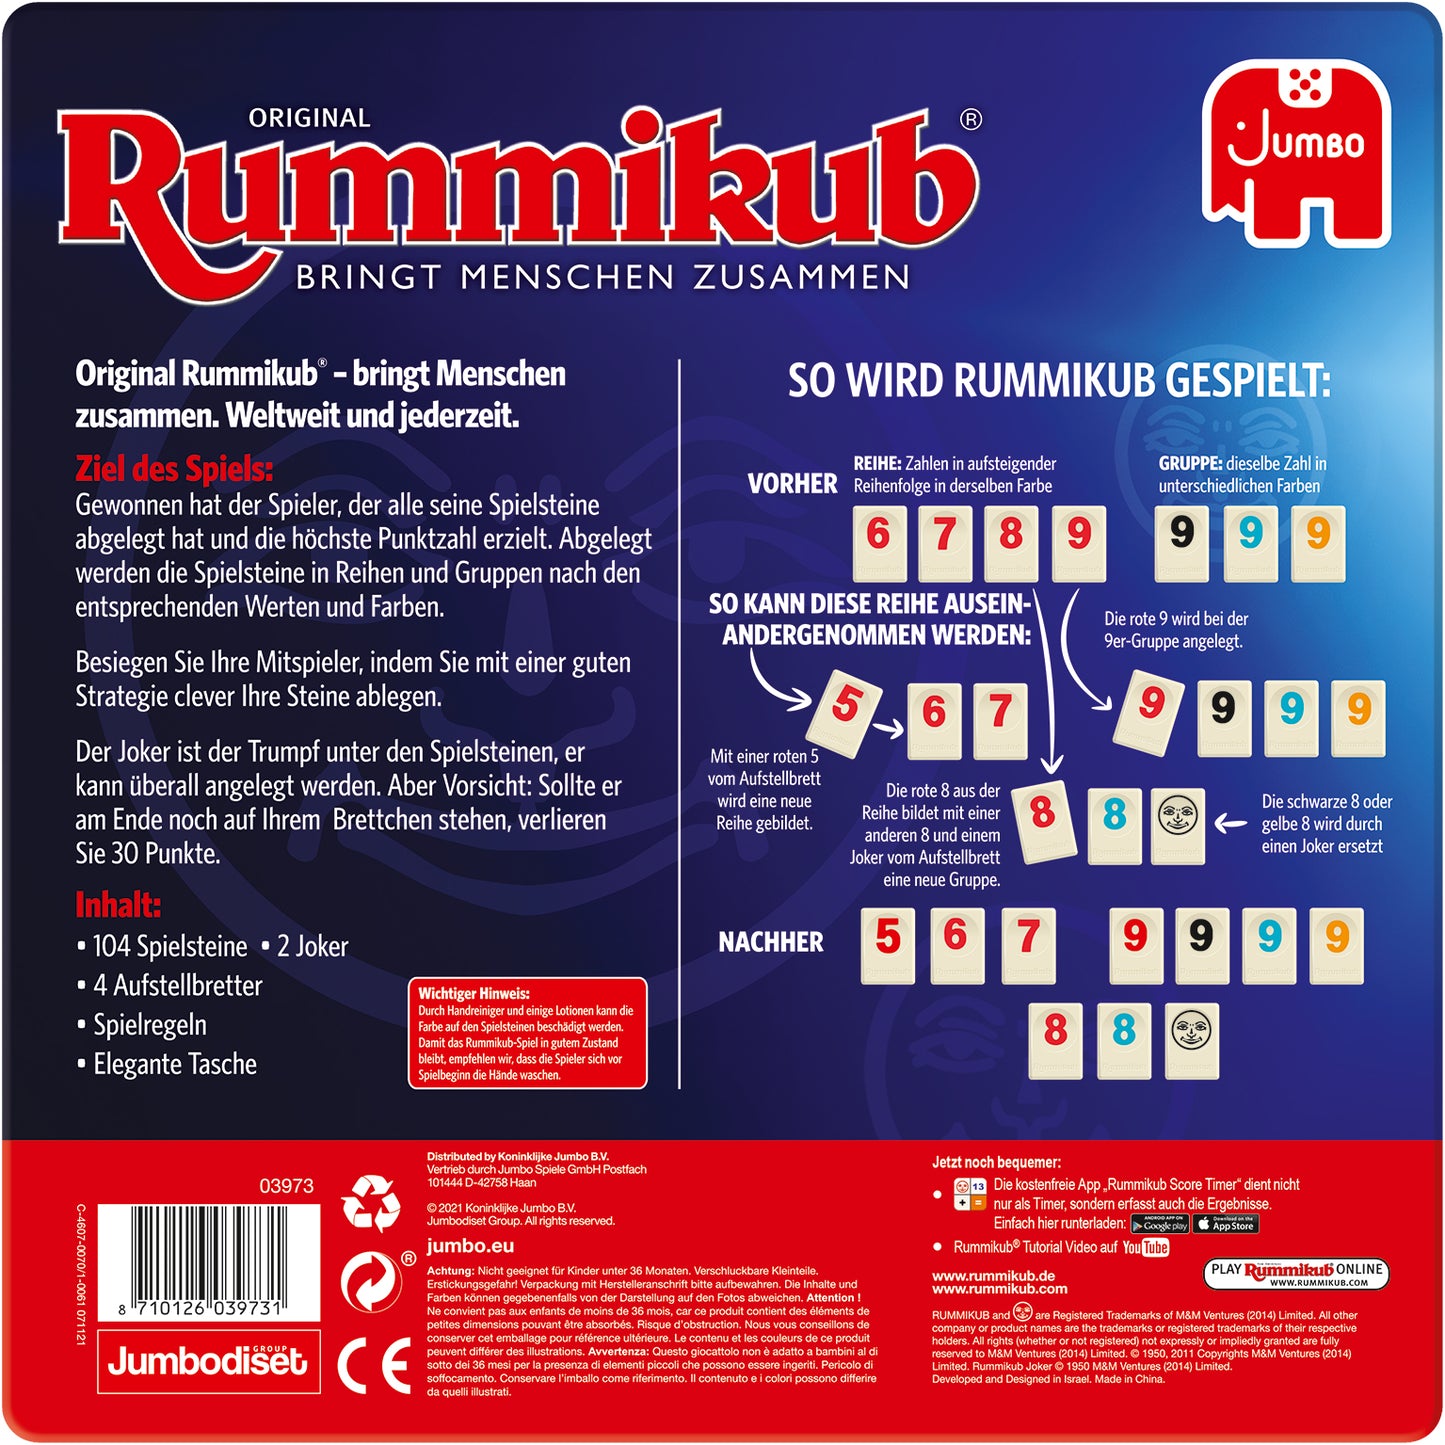 Original Rummikub in Metalldose - product image - Jumboplay.com